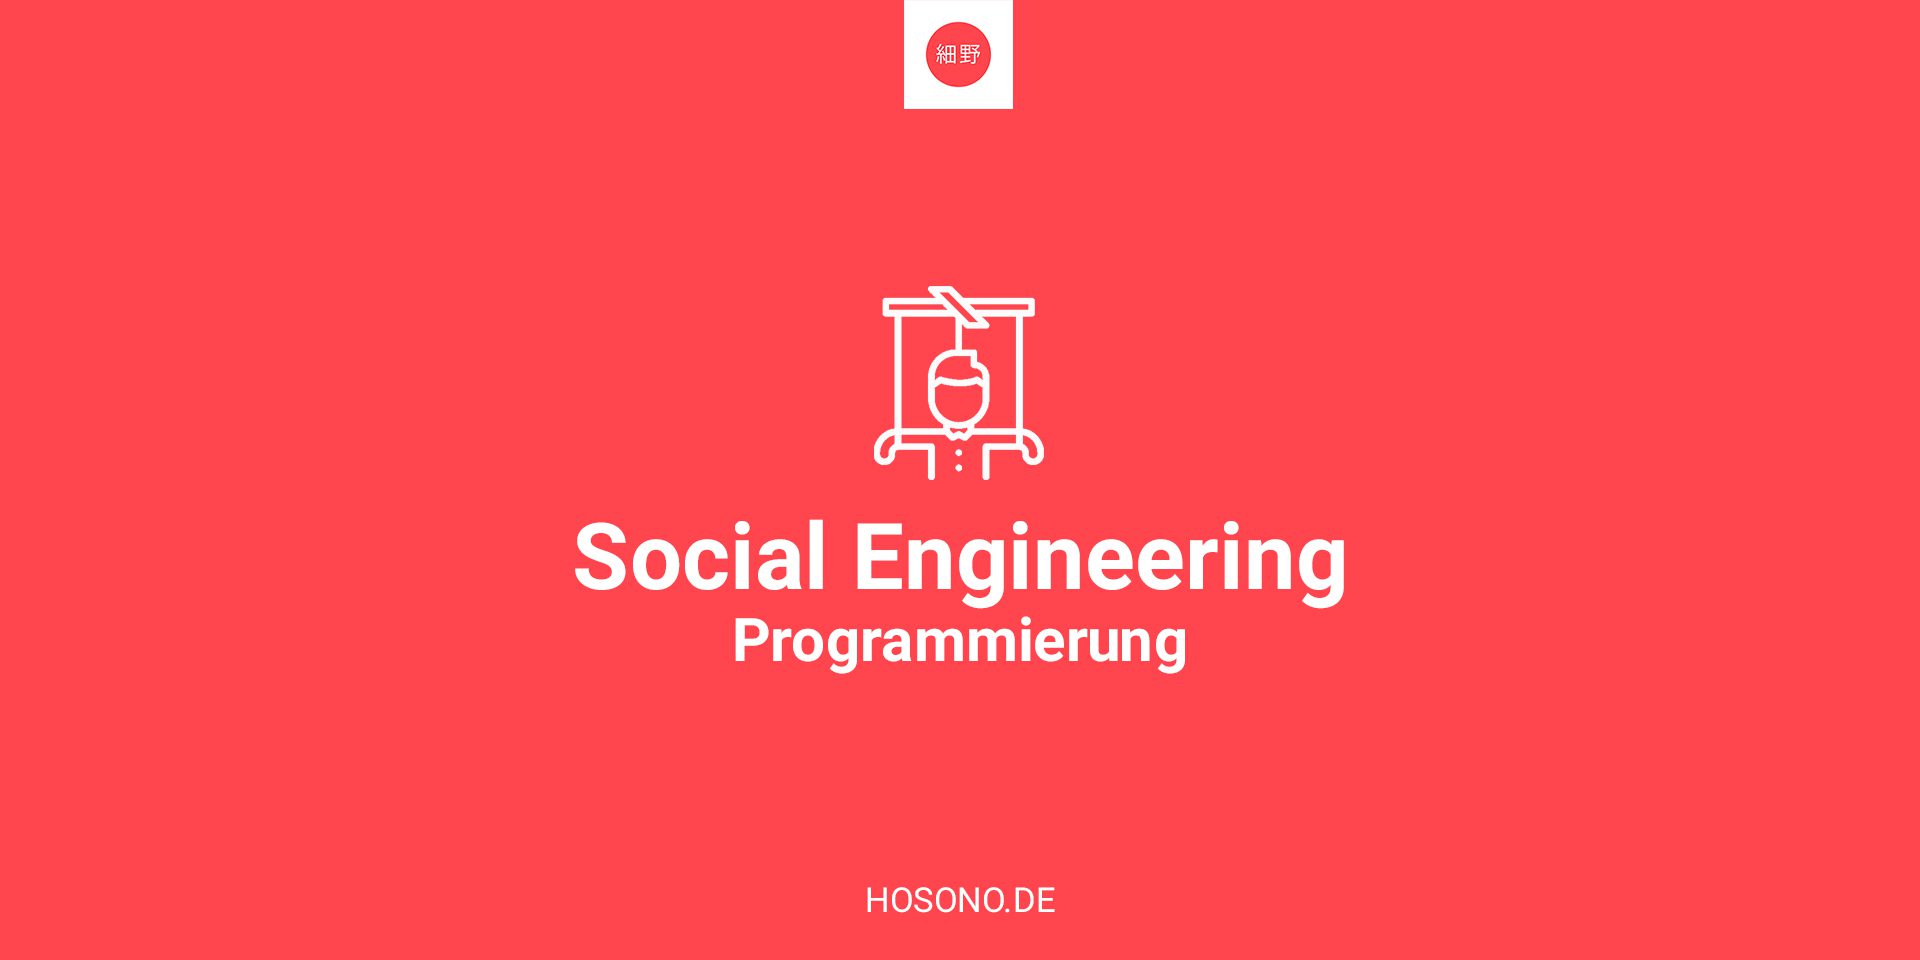 Social Engineering / Human Hacking wie man sich dagegen wehrt